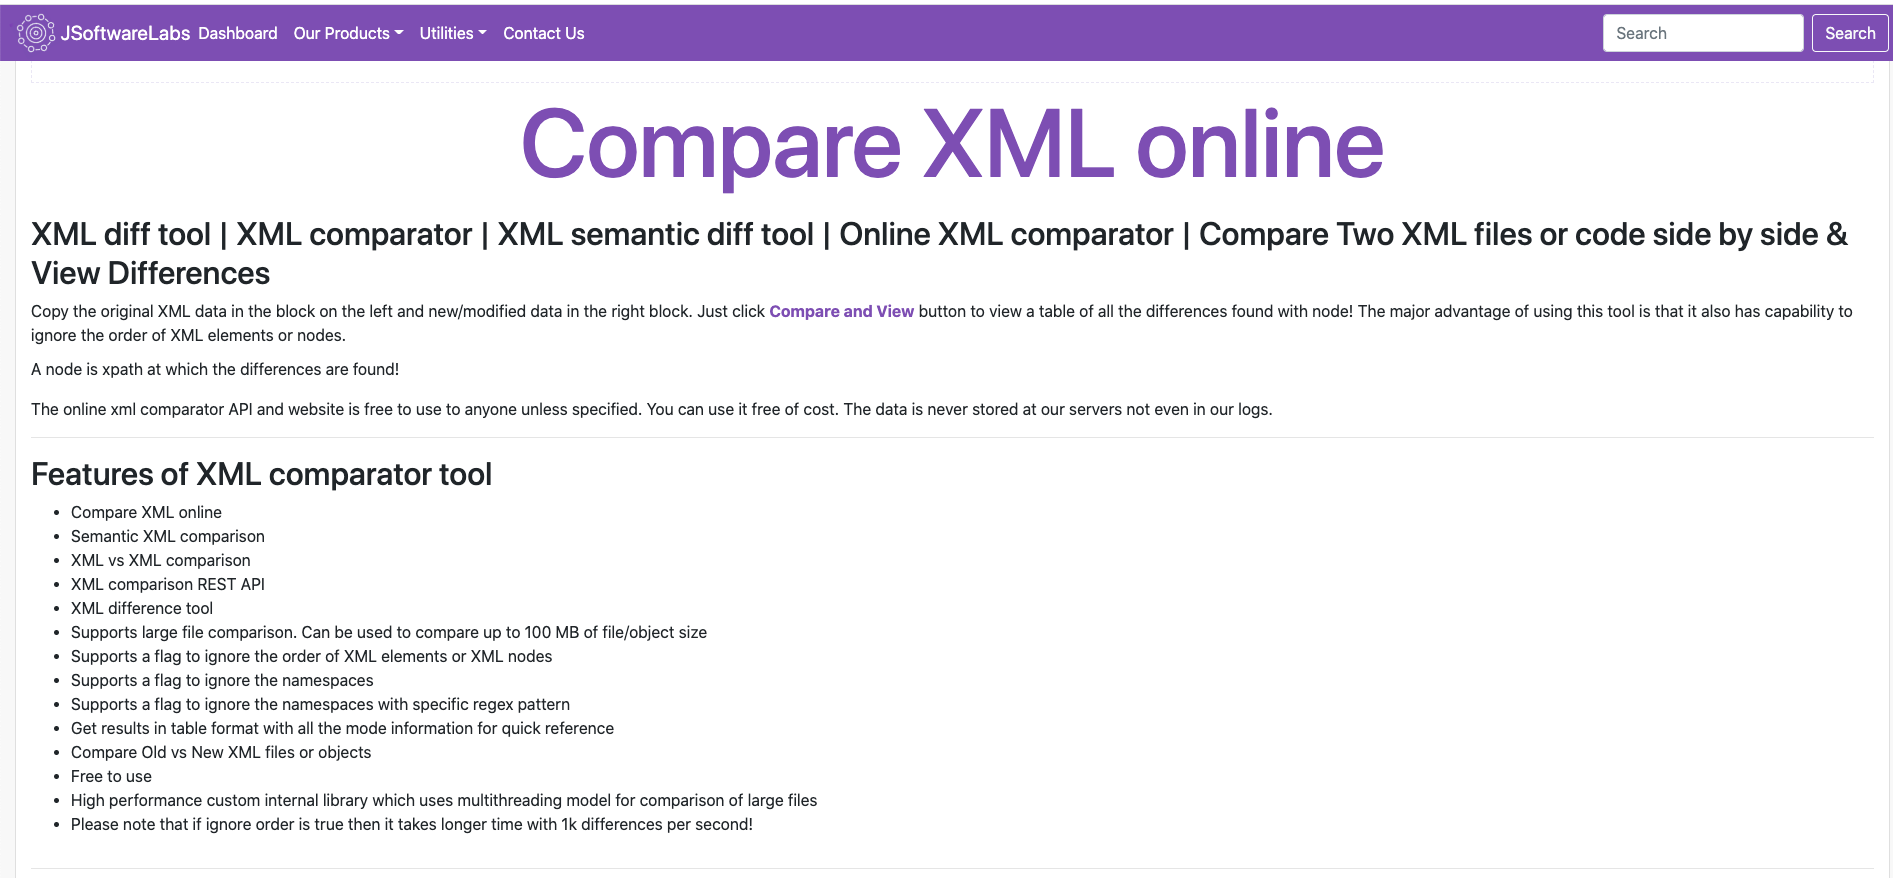 xml comparator features